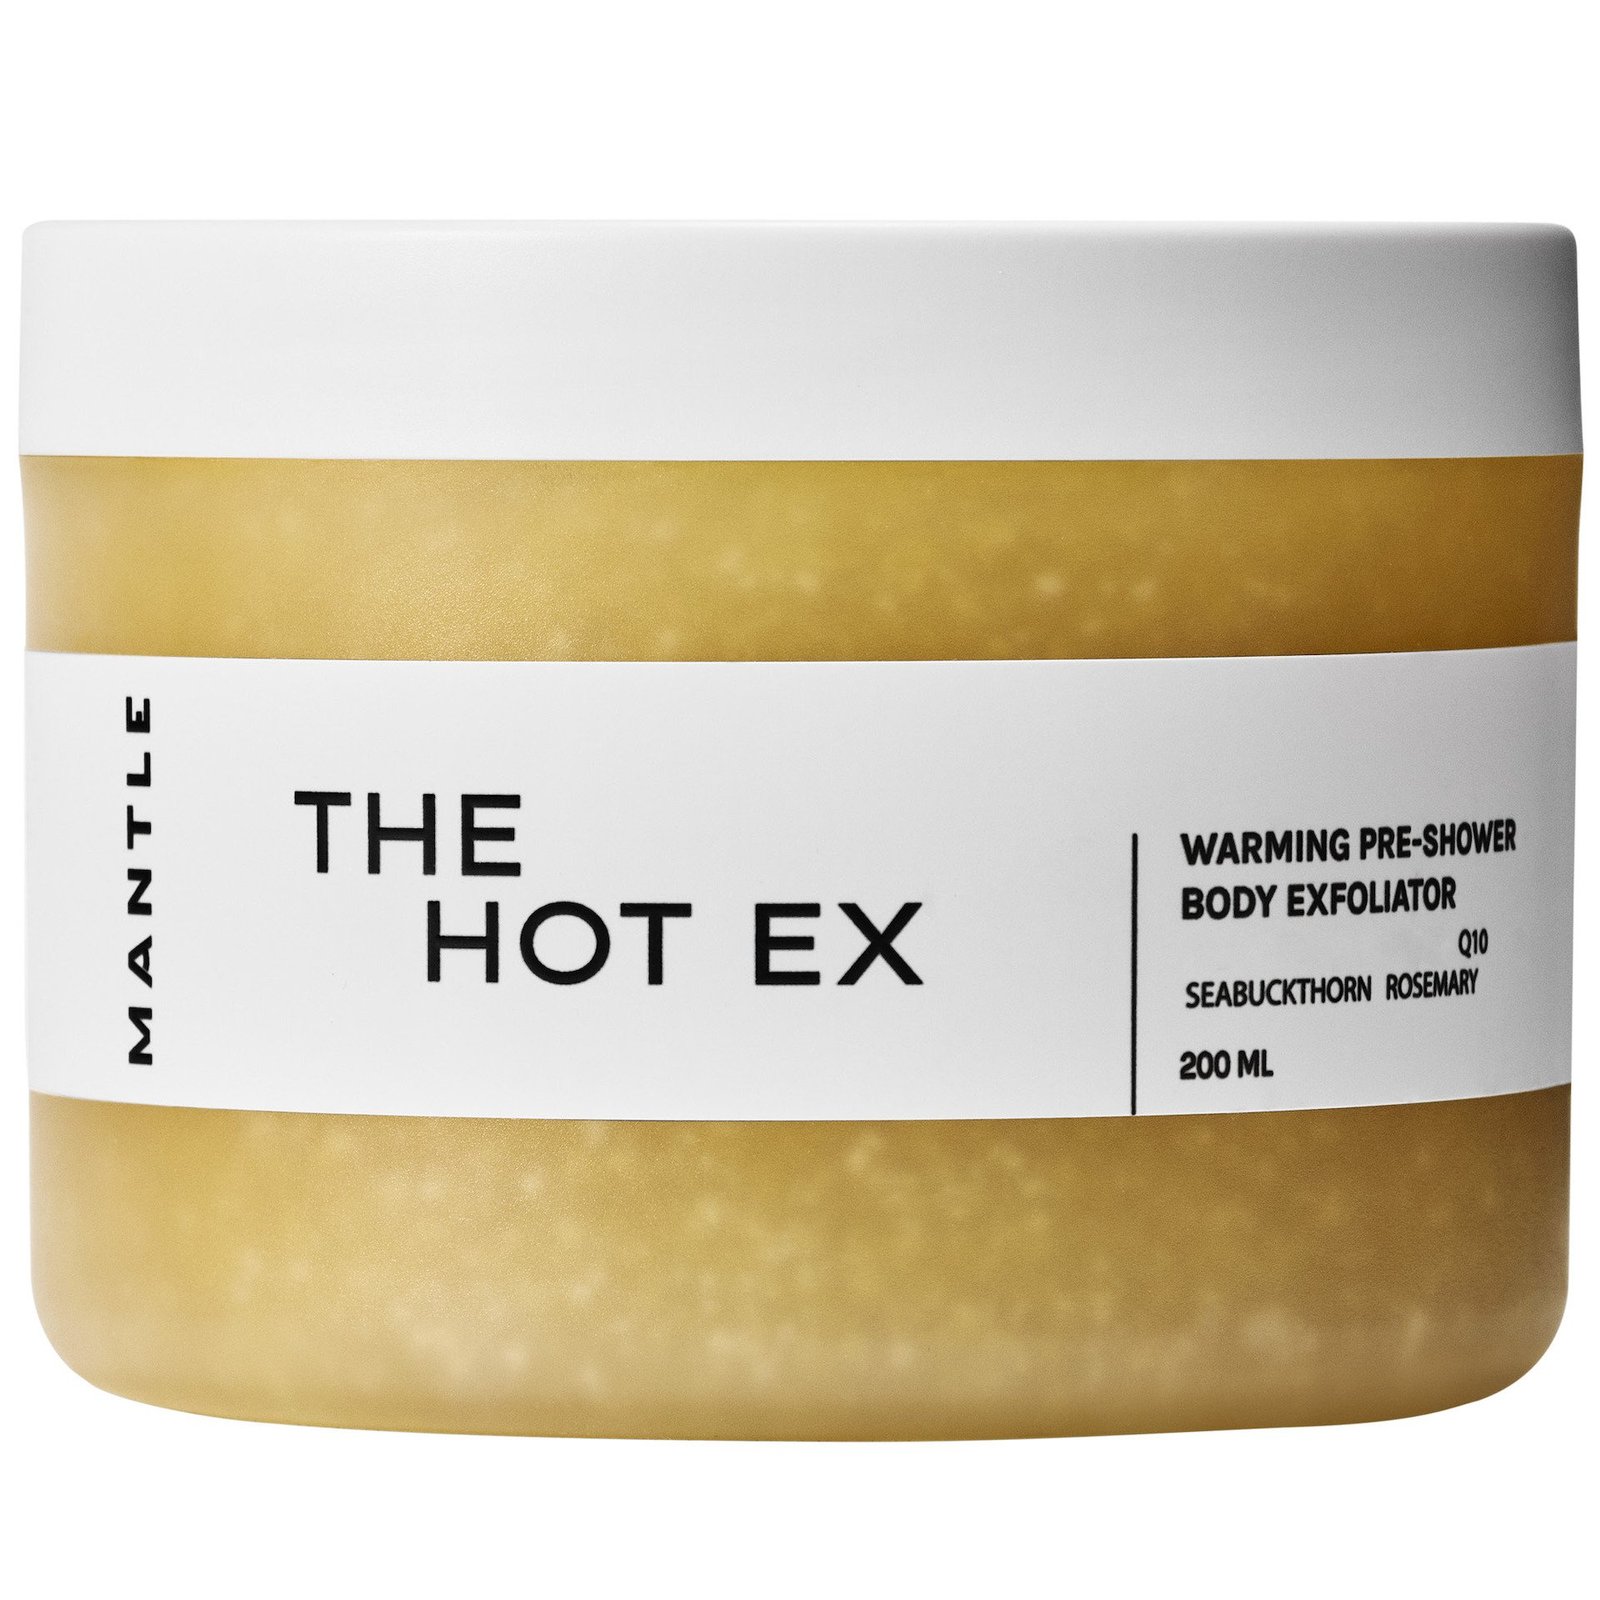 MANTLE The Hot Ex – Warming pre-shower body exfoliator 200 ml